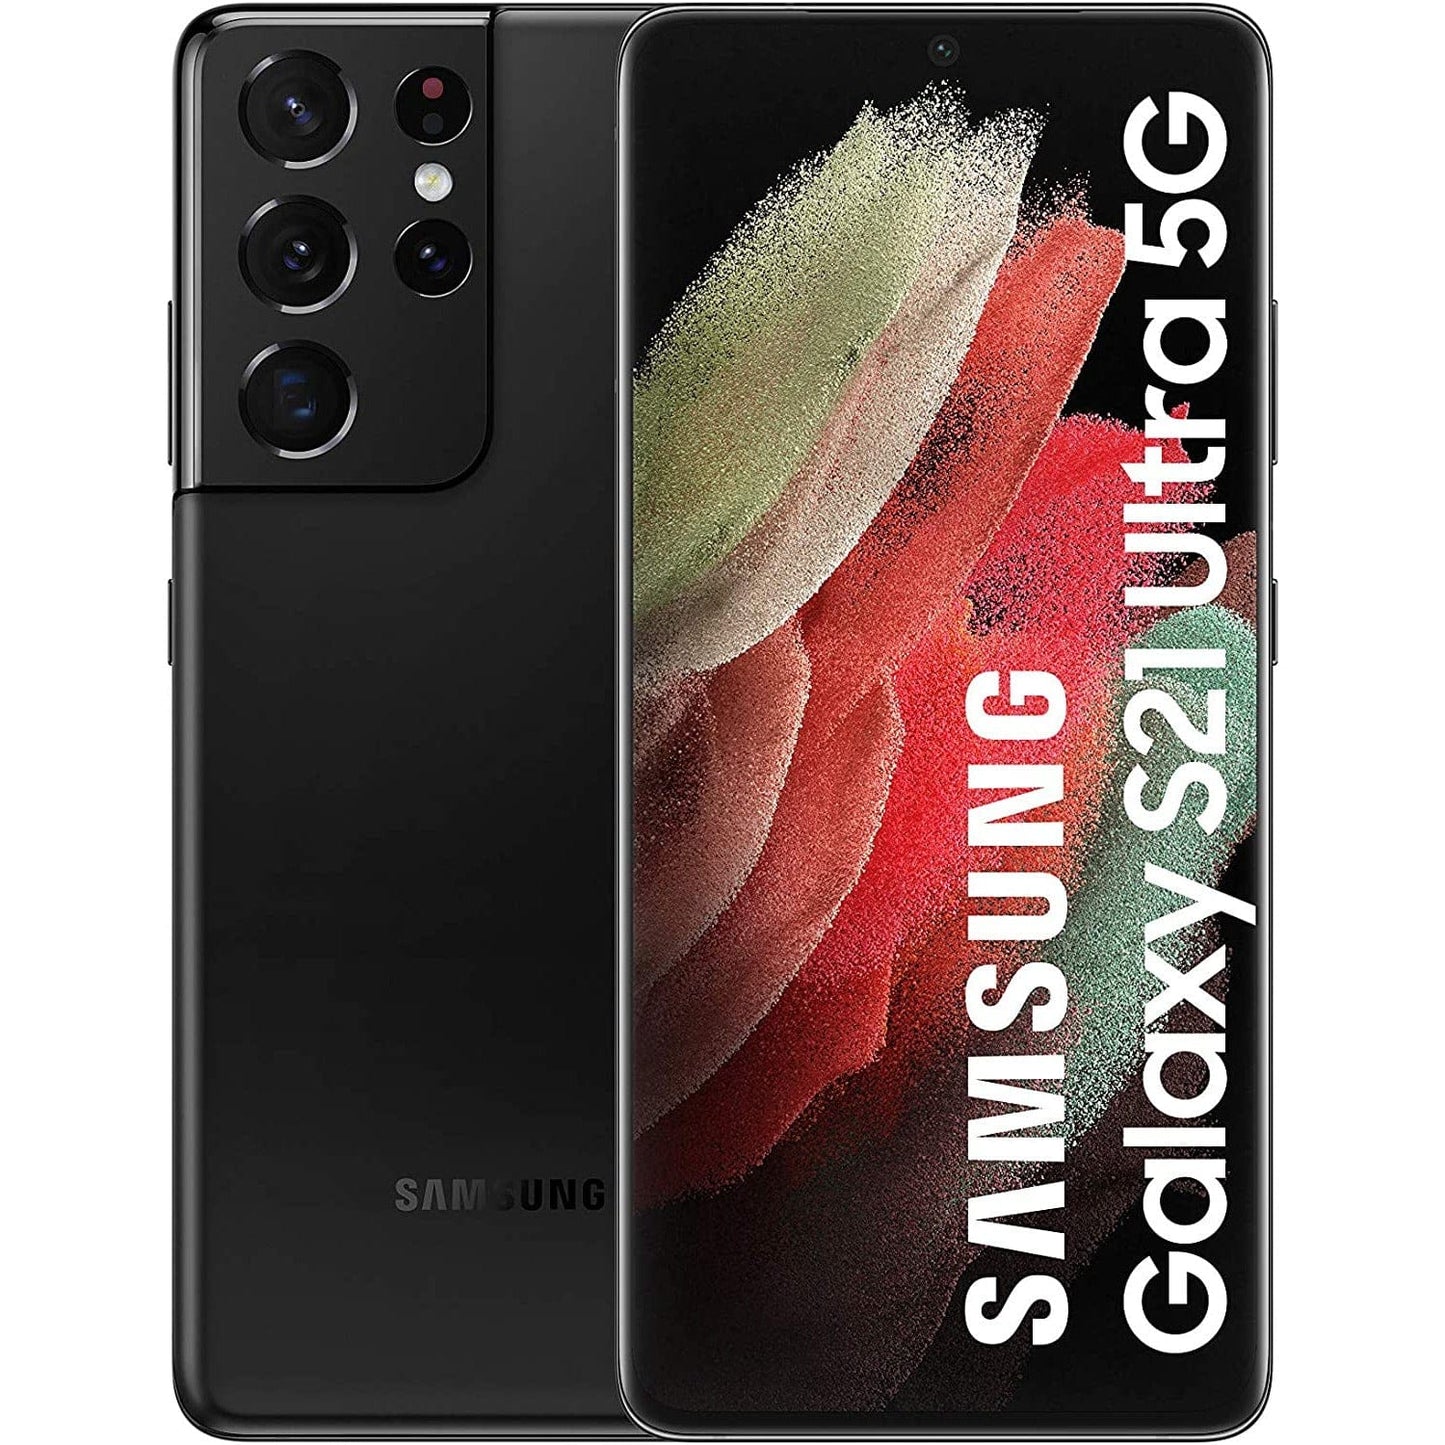 Samsung Galaxy S21 Ultra 5G, Phantom Black - Unlocked